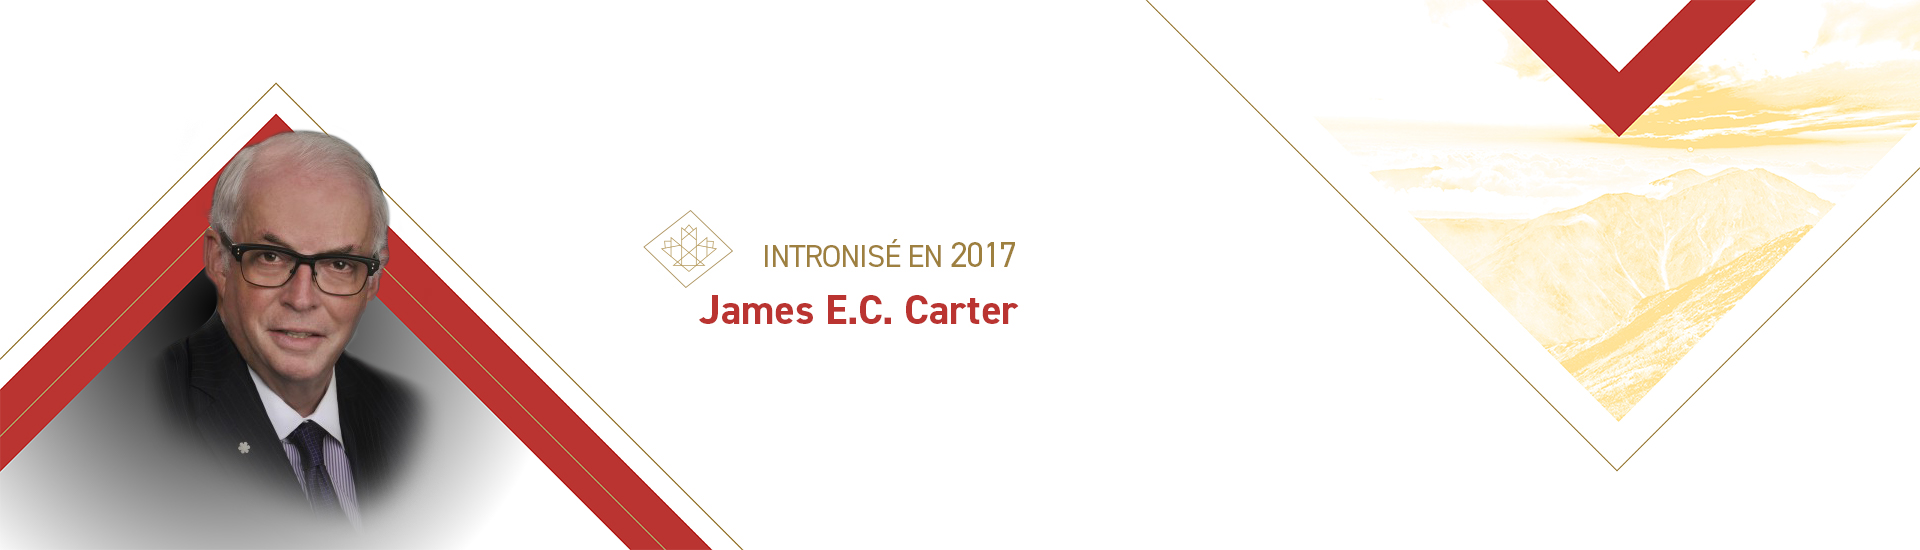 James C.E. Carter (b. 1950)